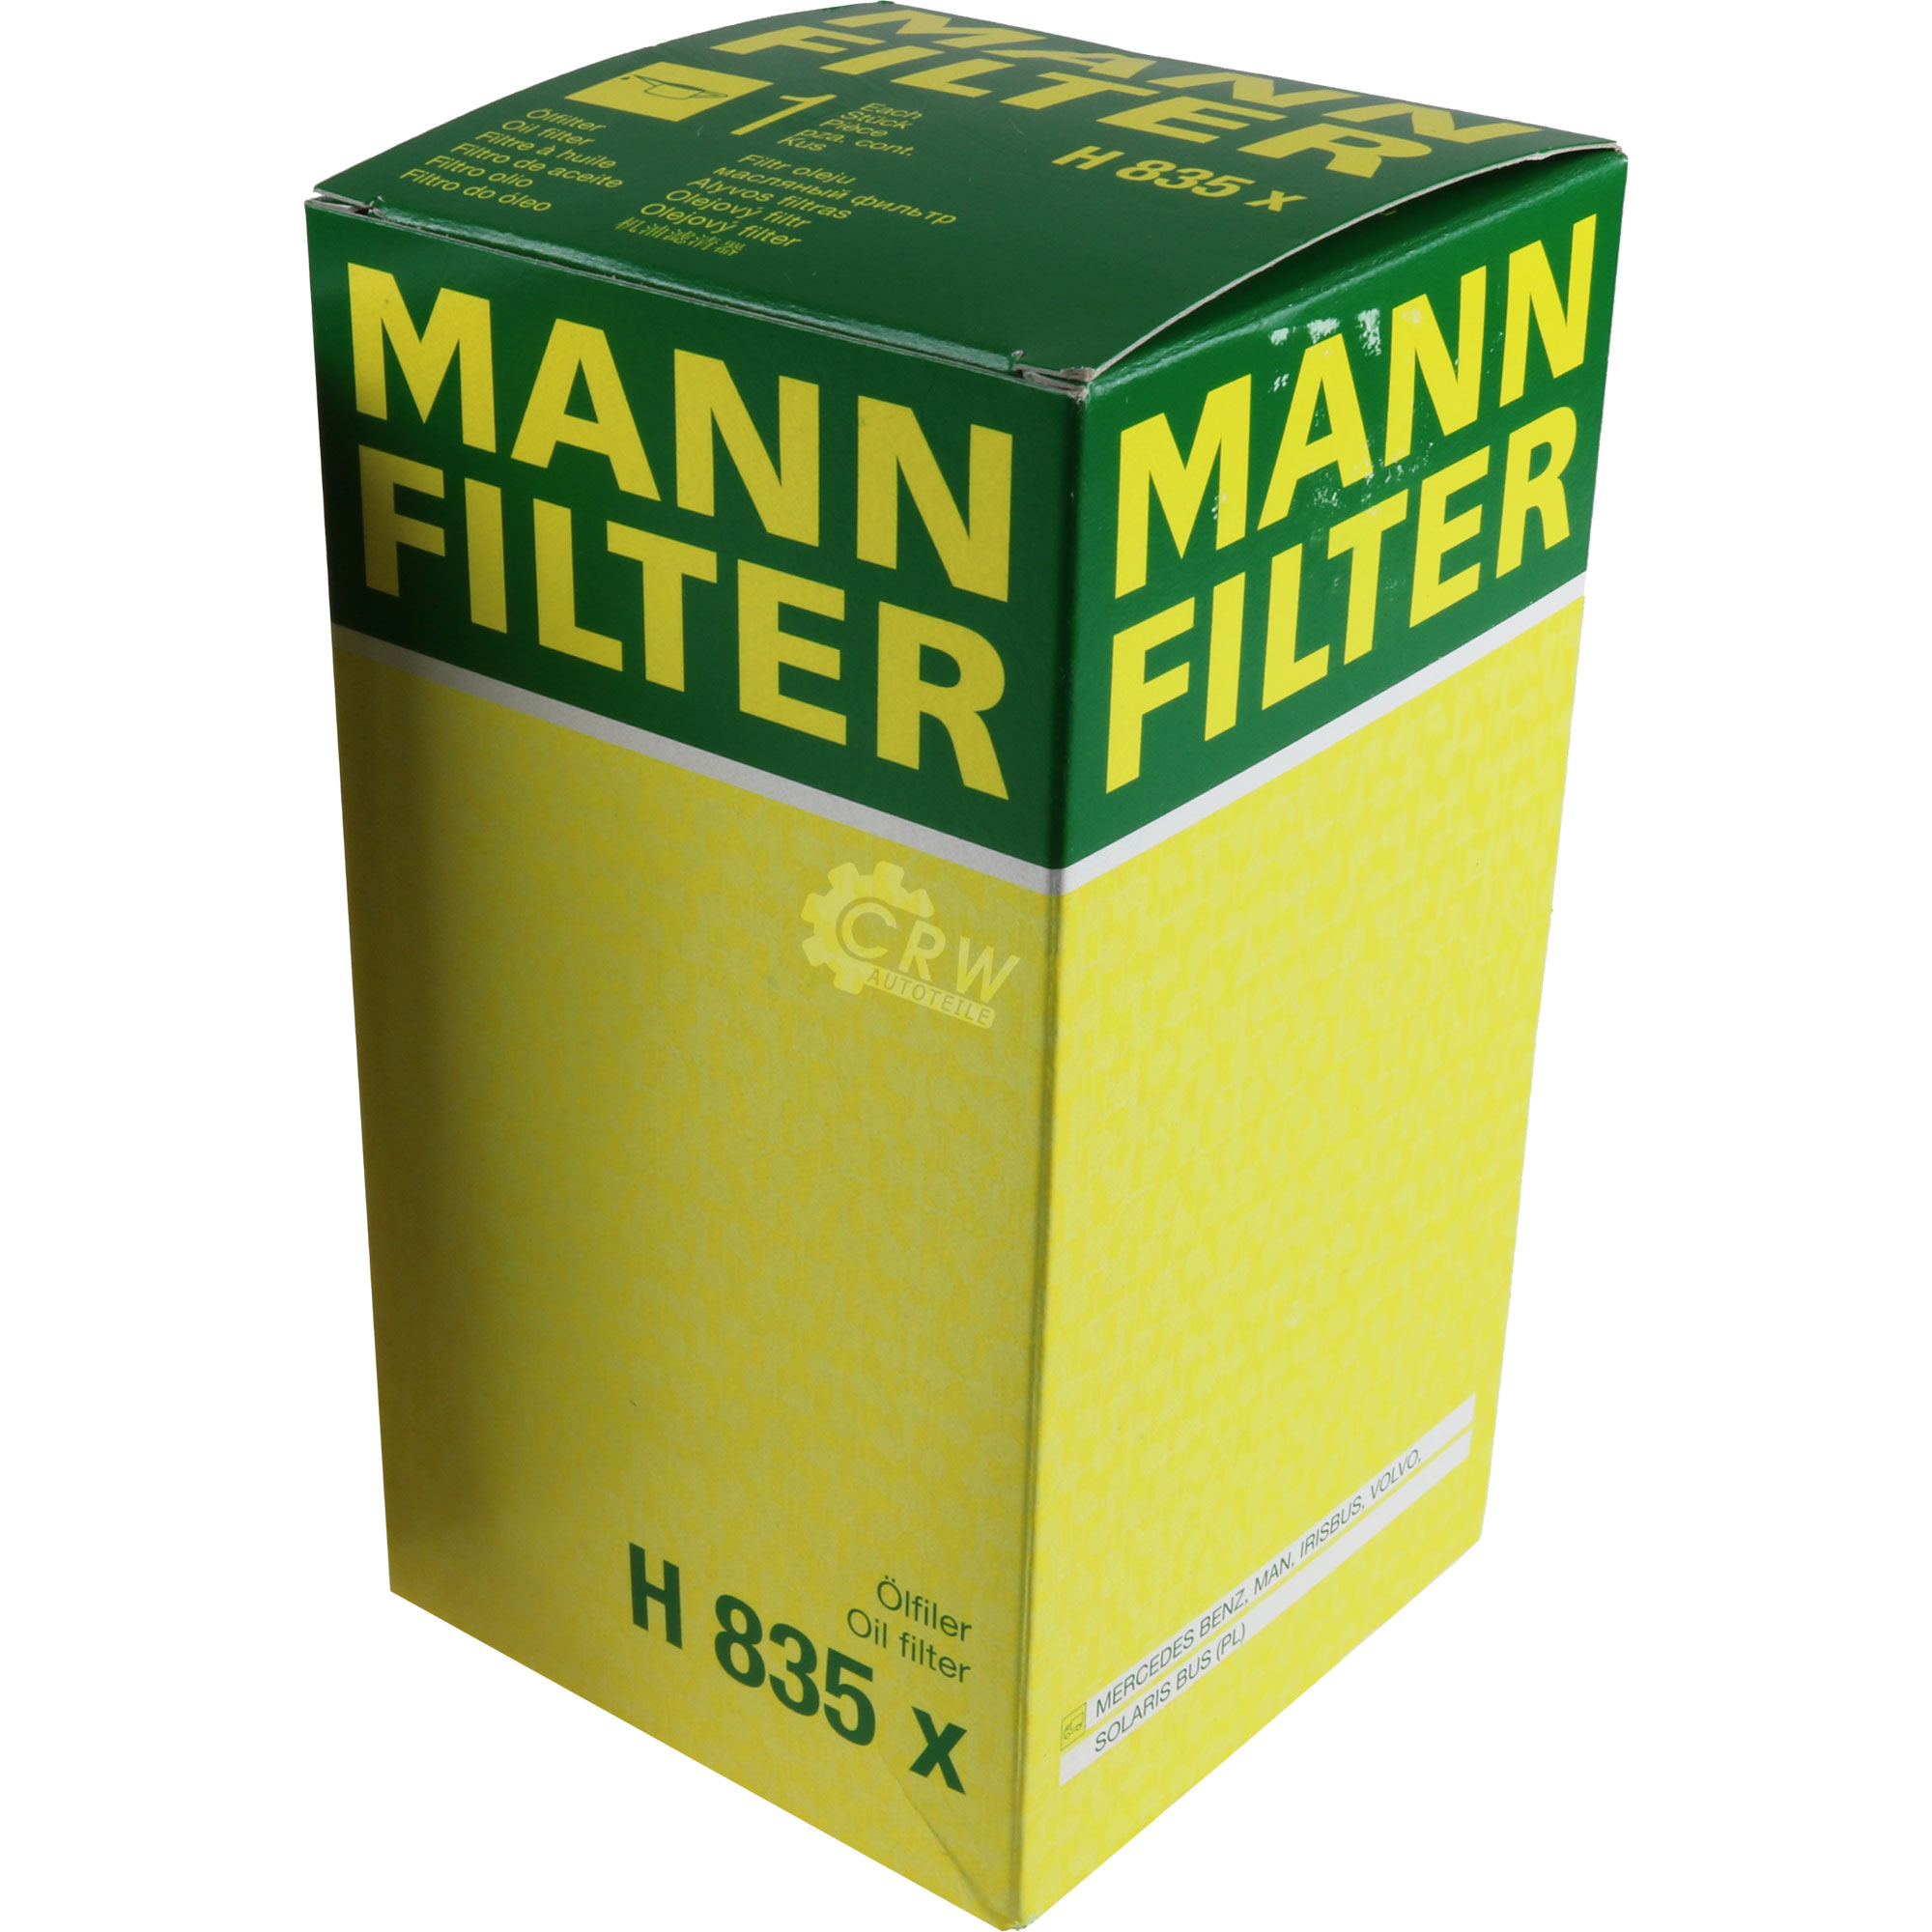 MANN-FILTER Hydraulikfilter für Automatikgetriebe H 835 x Ölfilter